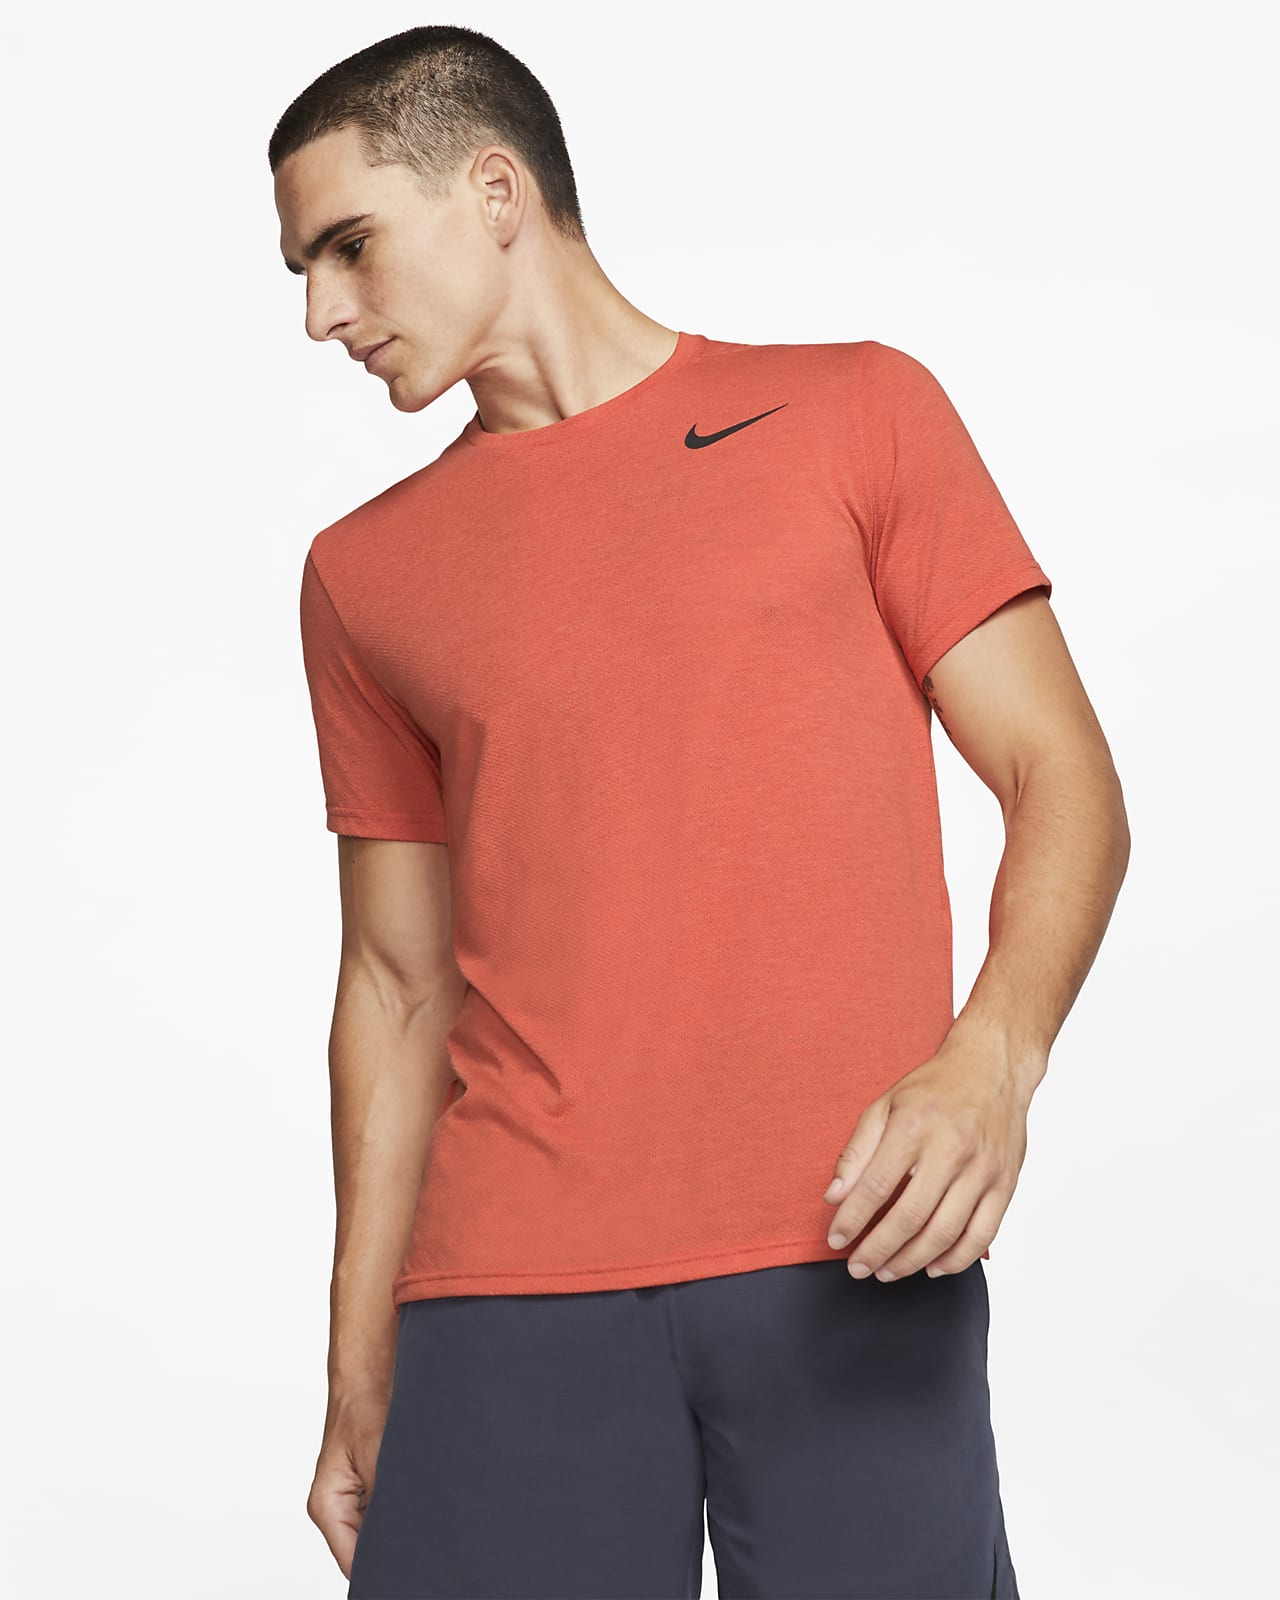 Nike Breathe Men's Short-Sleeve Training Top